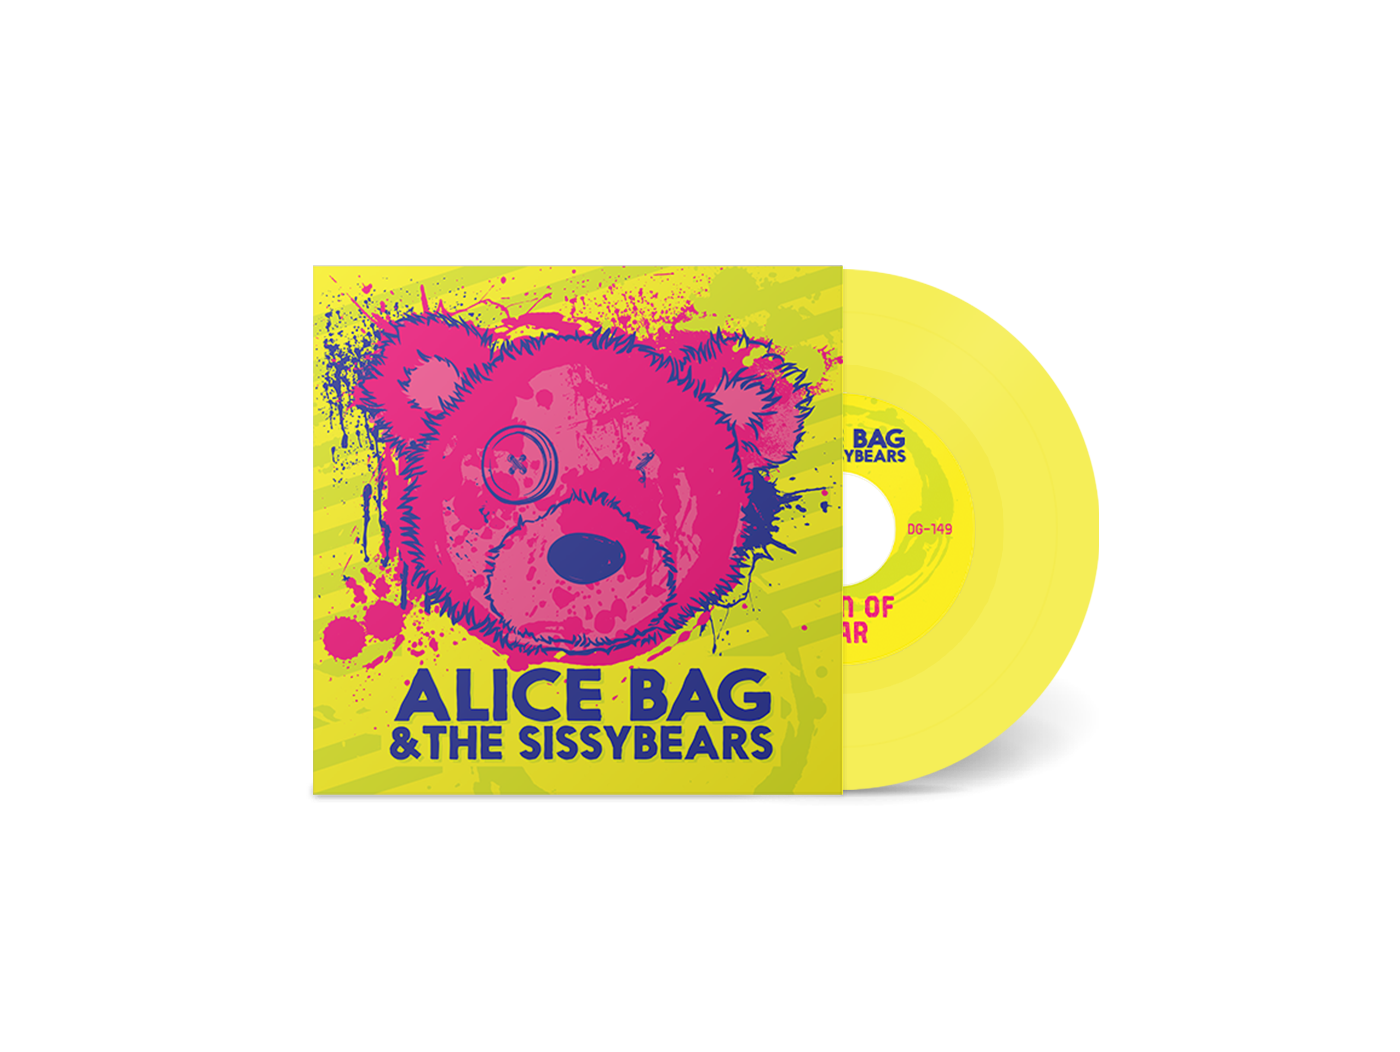 Alice Bag "Alice Bag & The Sissybears" 7"